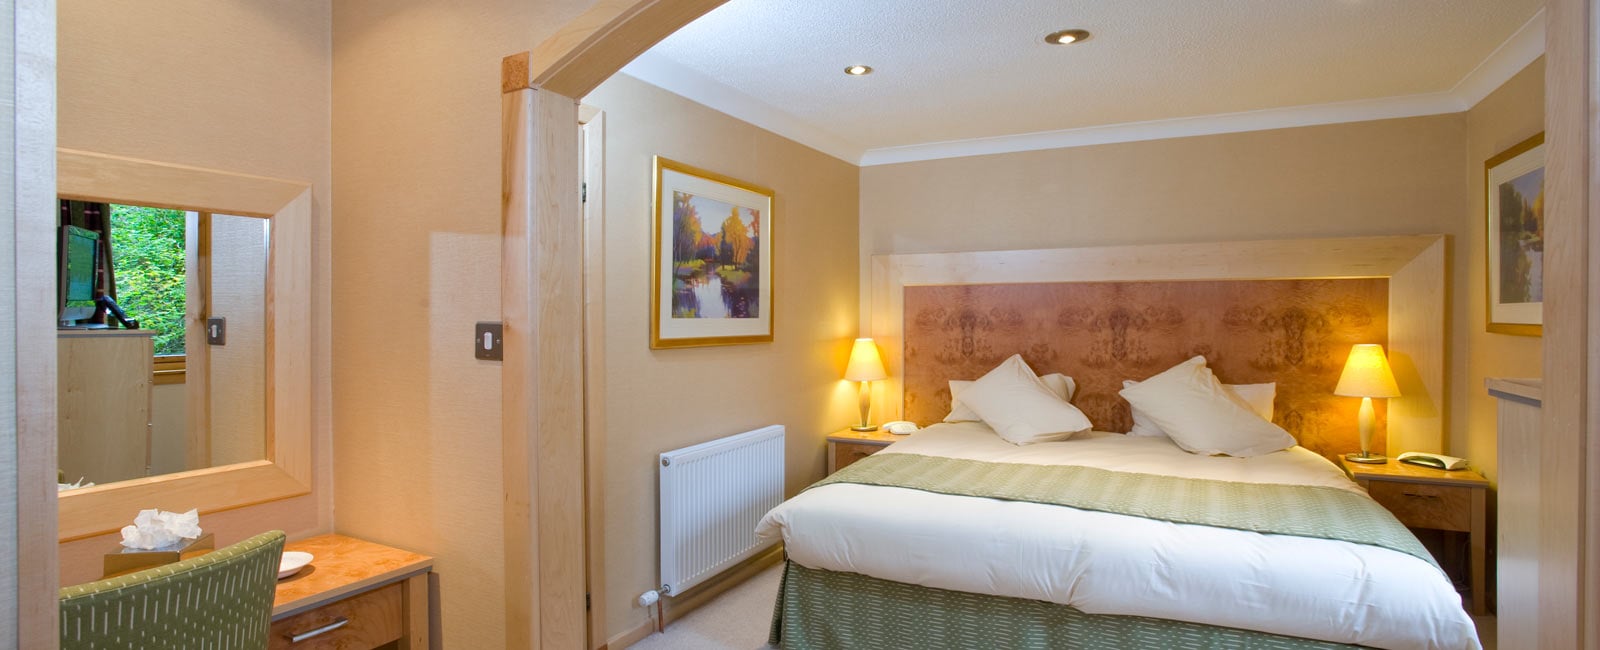 Bedroom at Hilton Grand Vacations Club at Craigendarroch Lodges in Royal Deeside, Scotland